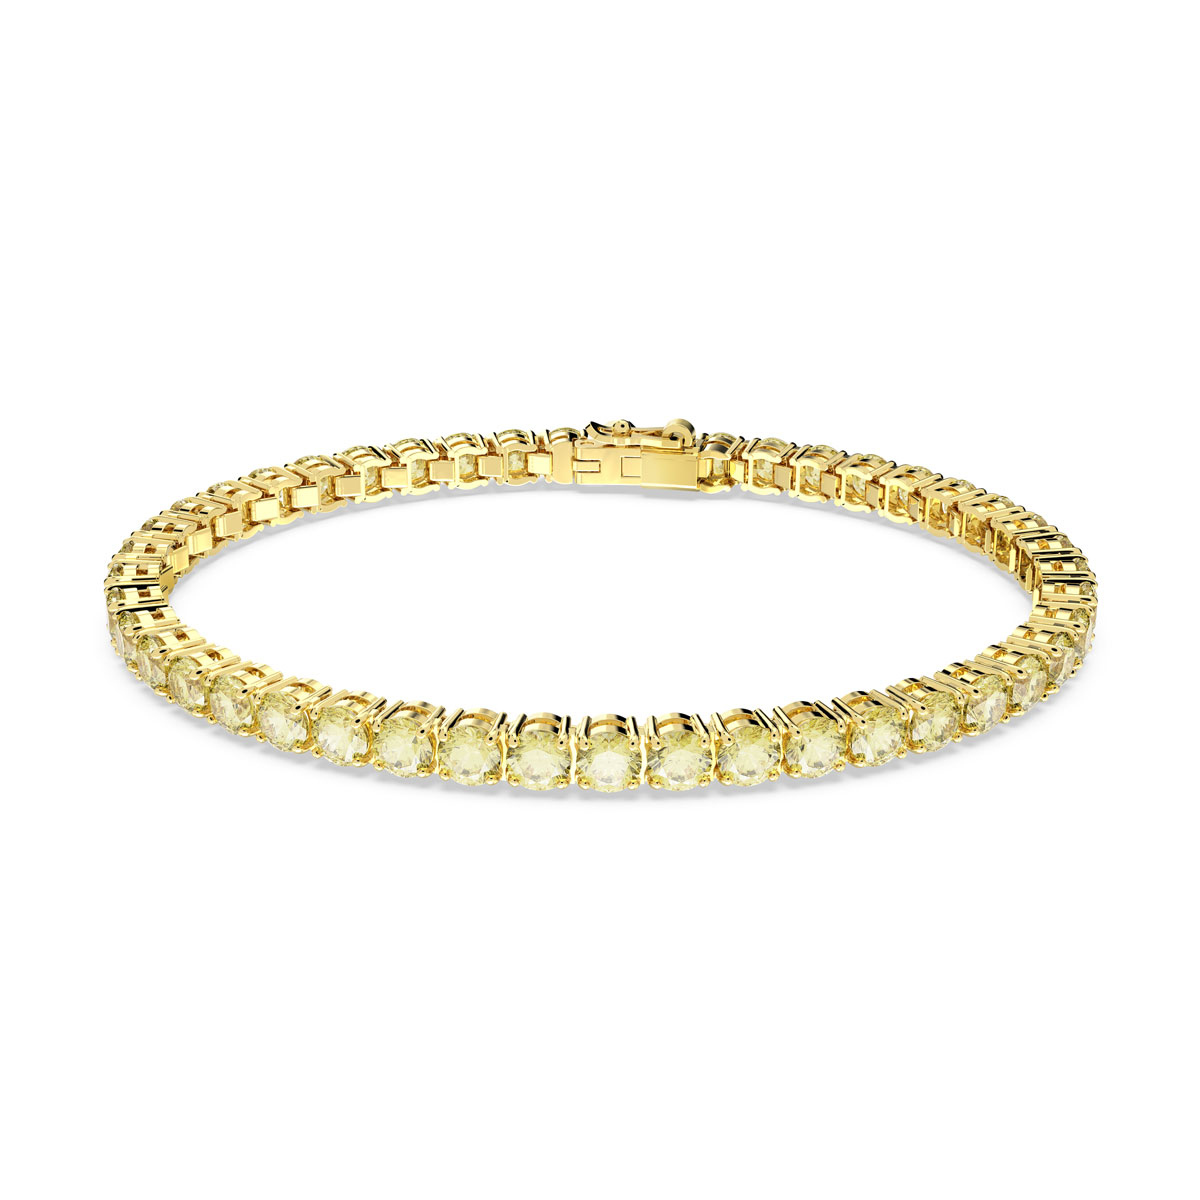 Swarovski Jewelry Yellow and Gold Matrix Tennis Bracelet, Small